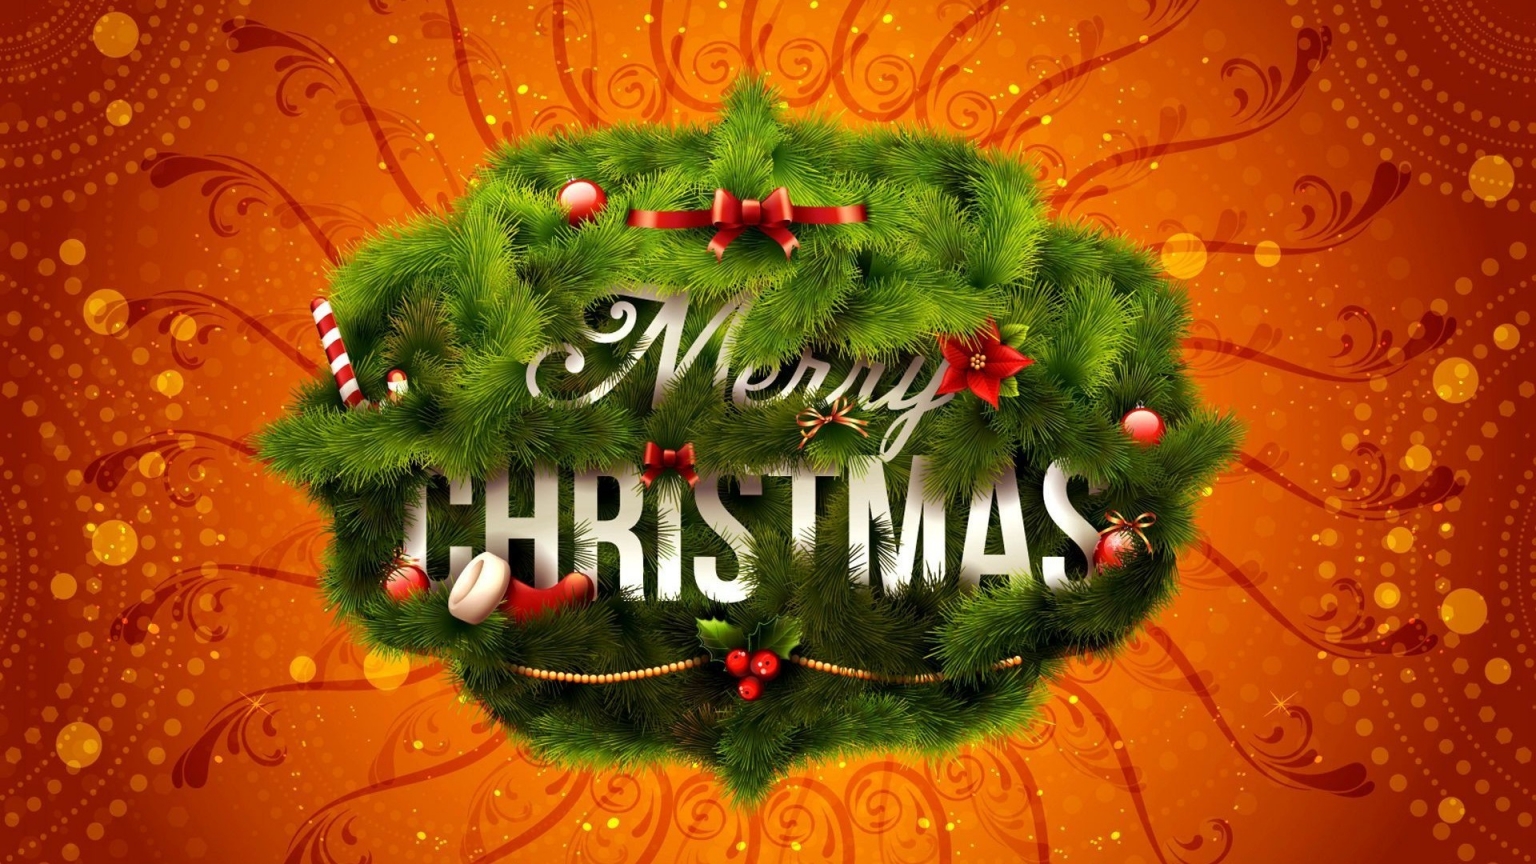 Merry Christmas Wreath for 1536 x 864 HDTV resolution